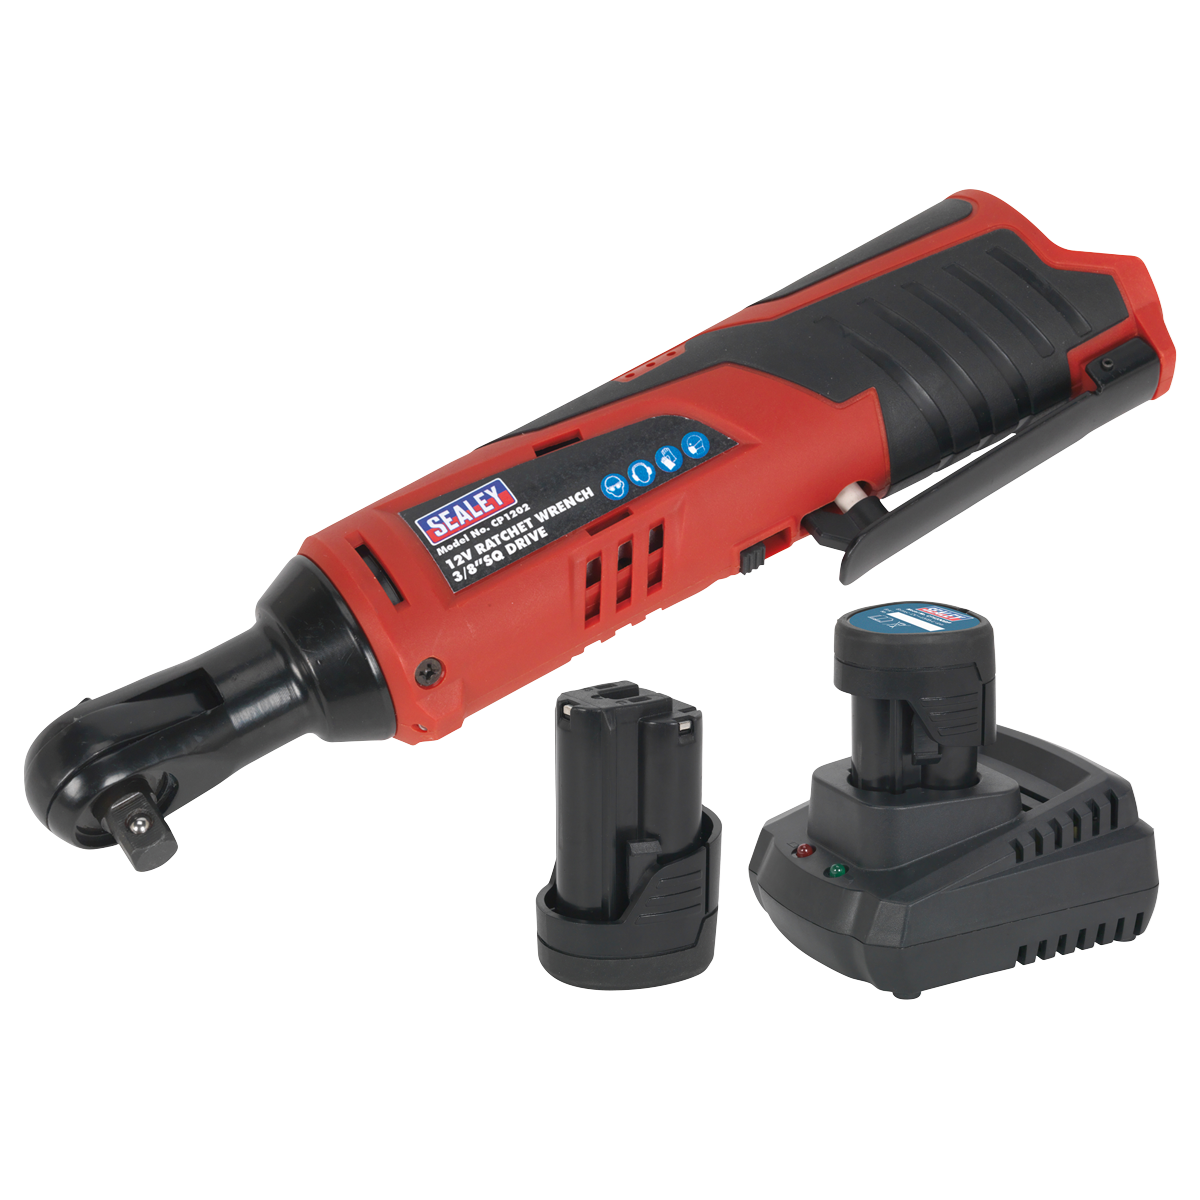 Sealey-Sealey-CP1202KIT-12V-Ratchet-Wrench-Kit-3/8"-Sq-Drive-2-Batteries,-12-V,-Red/Black,-3/8-Inch-CP1202KIT